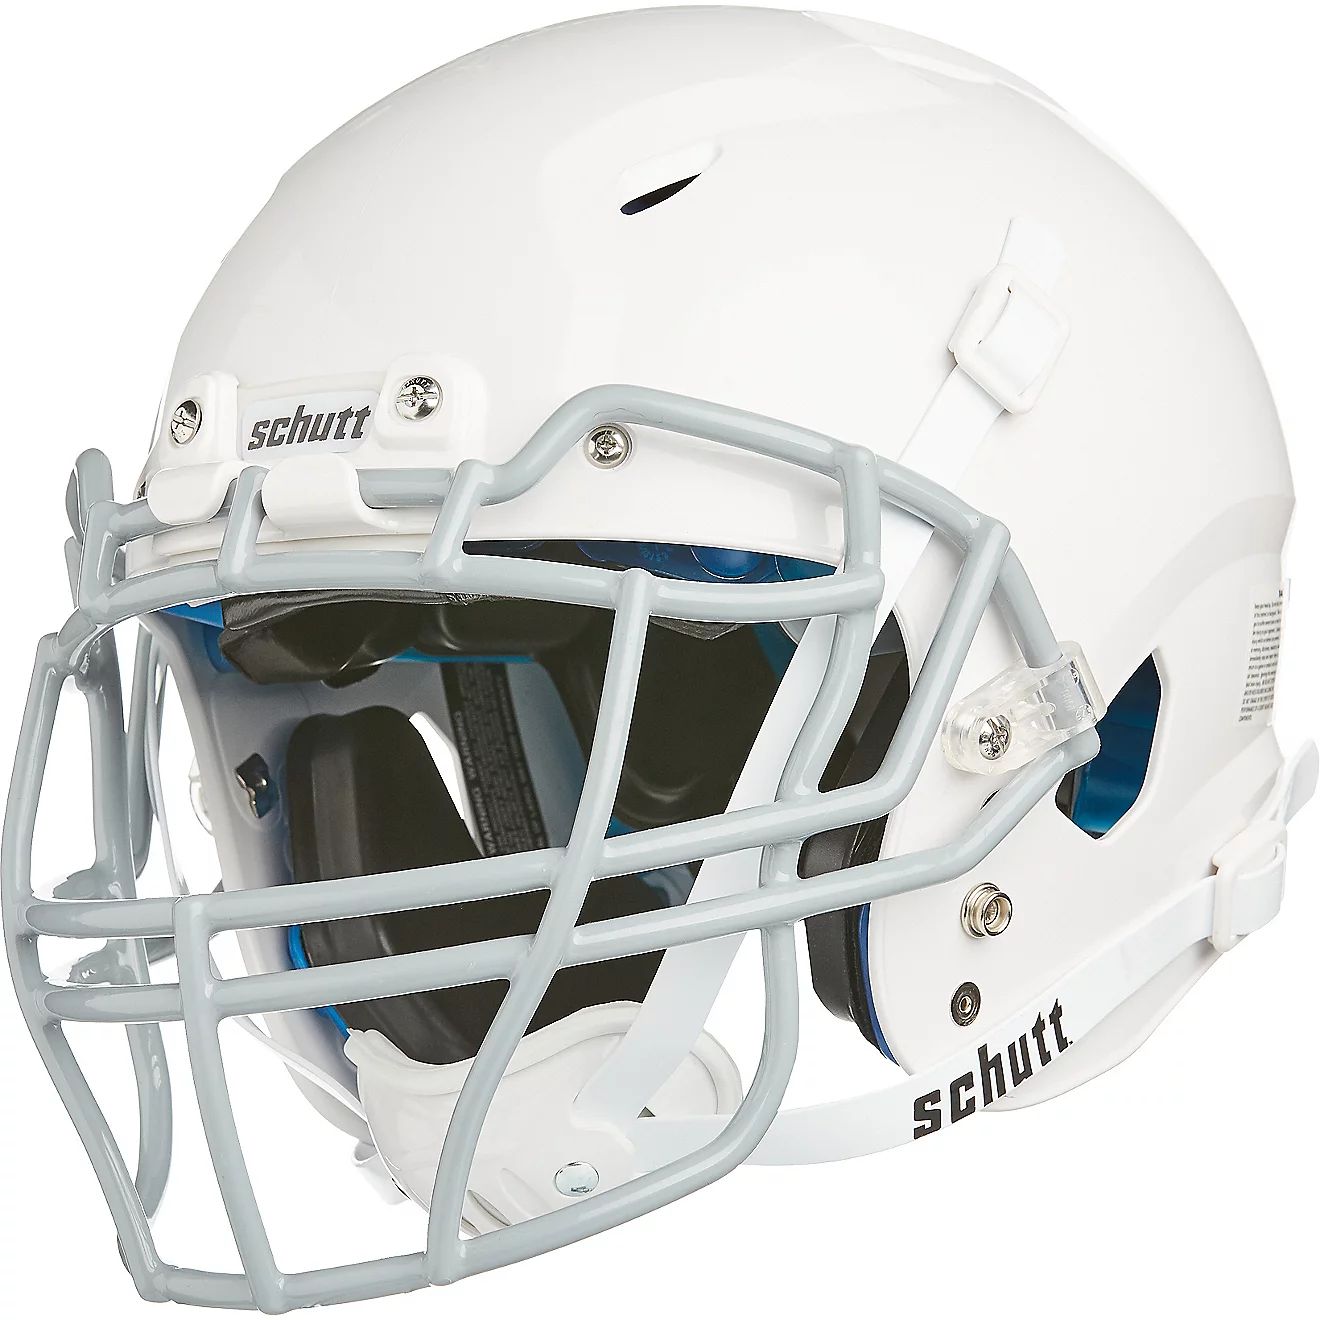 Schutt Youth Vengeance Pro Football Helmet | Academy | Academy Sports + Outdoors